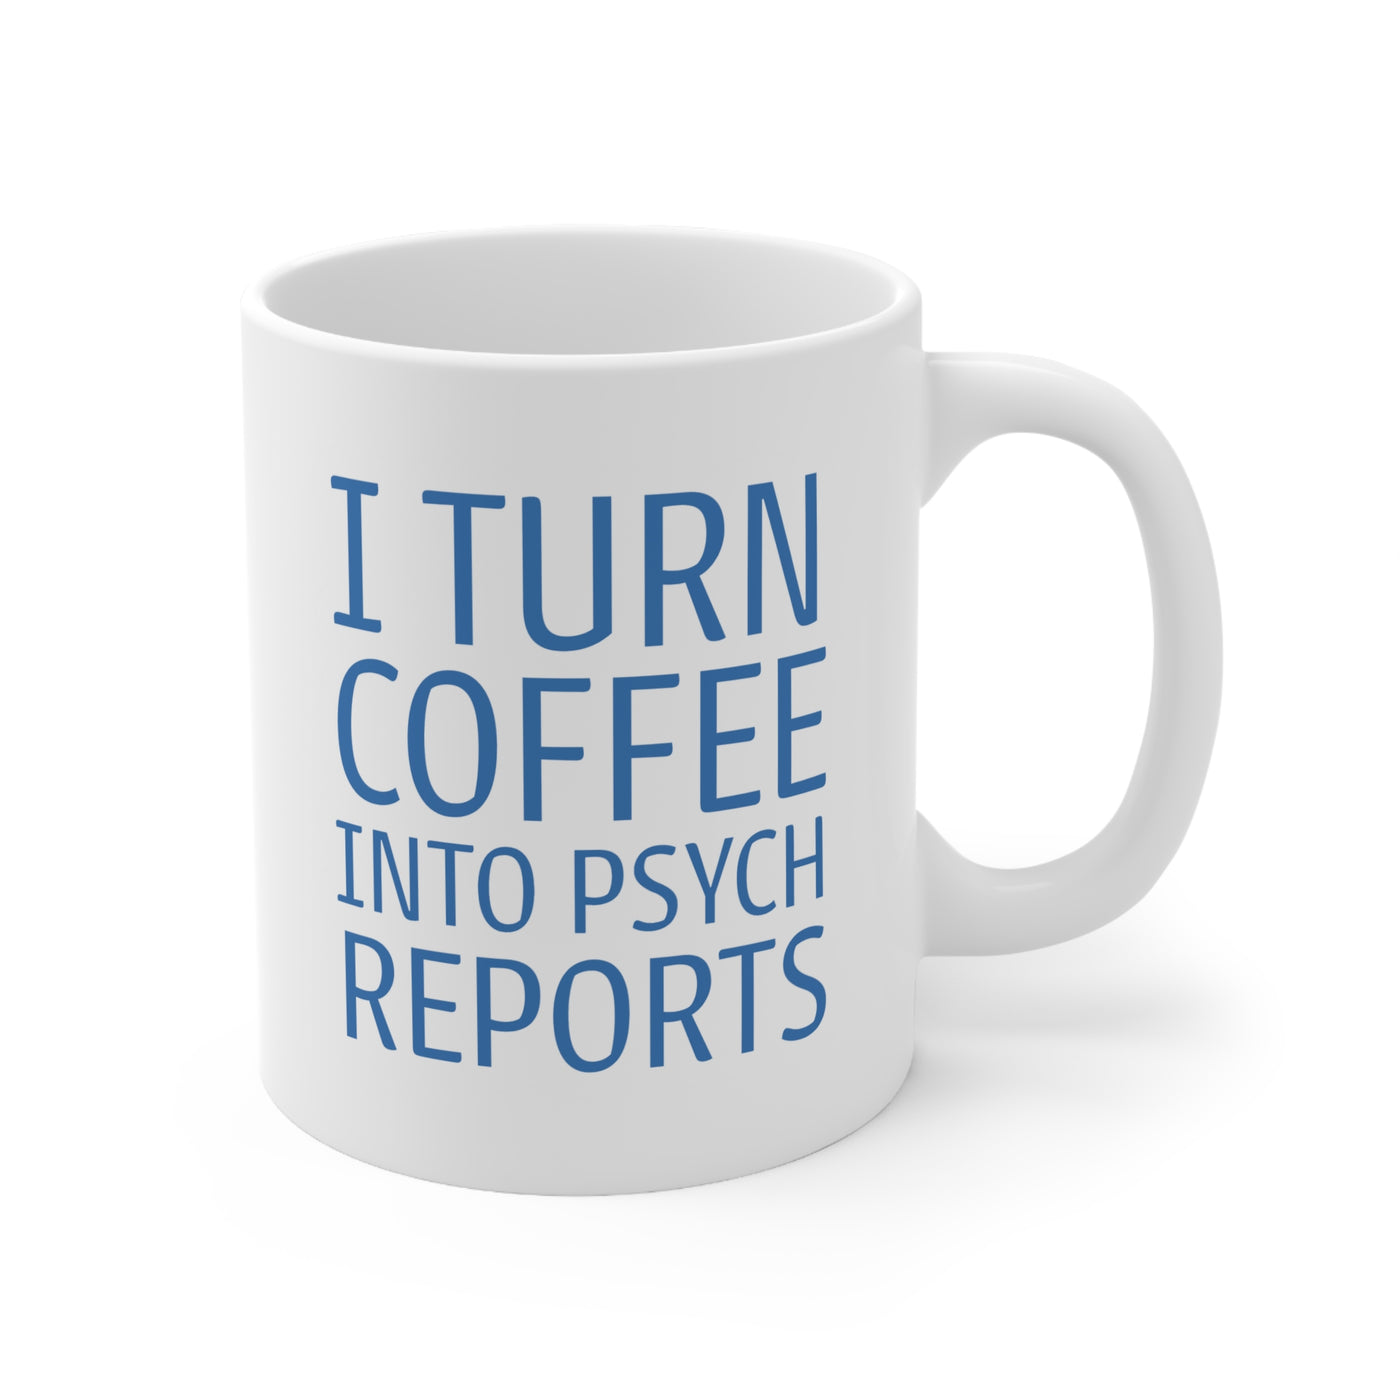 I Turn Coffee into Psych Reports - Ceramic Mug 11oz